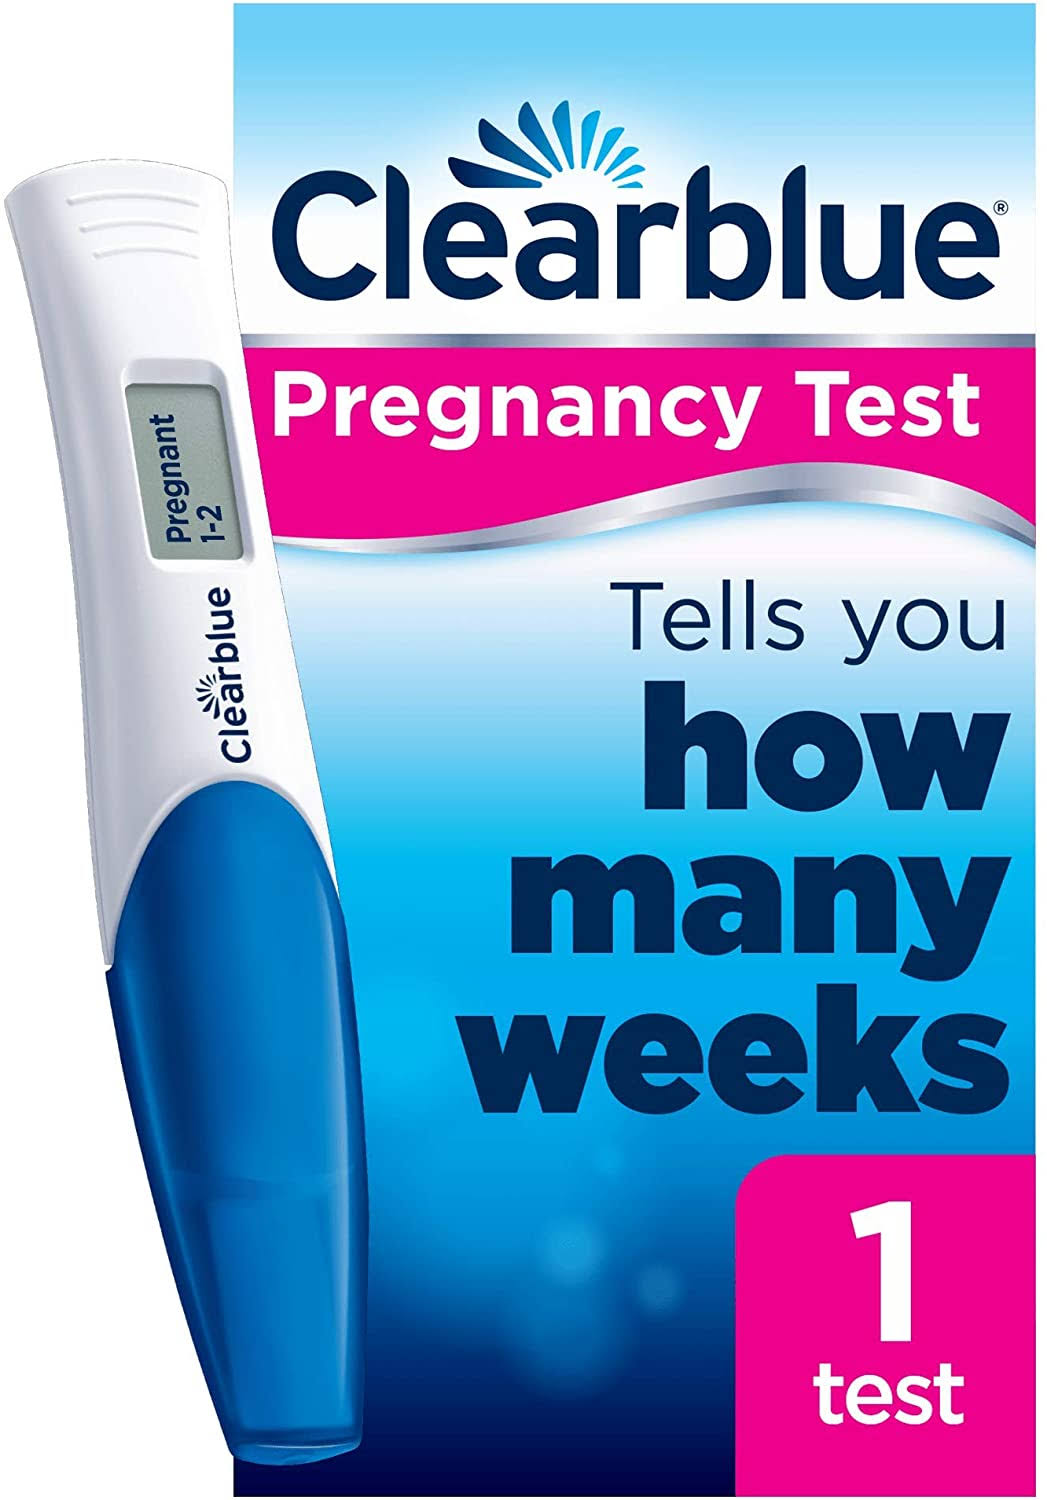 Clearblue Digital Pregnancy Test Kit - Single